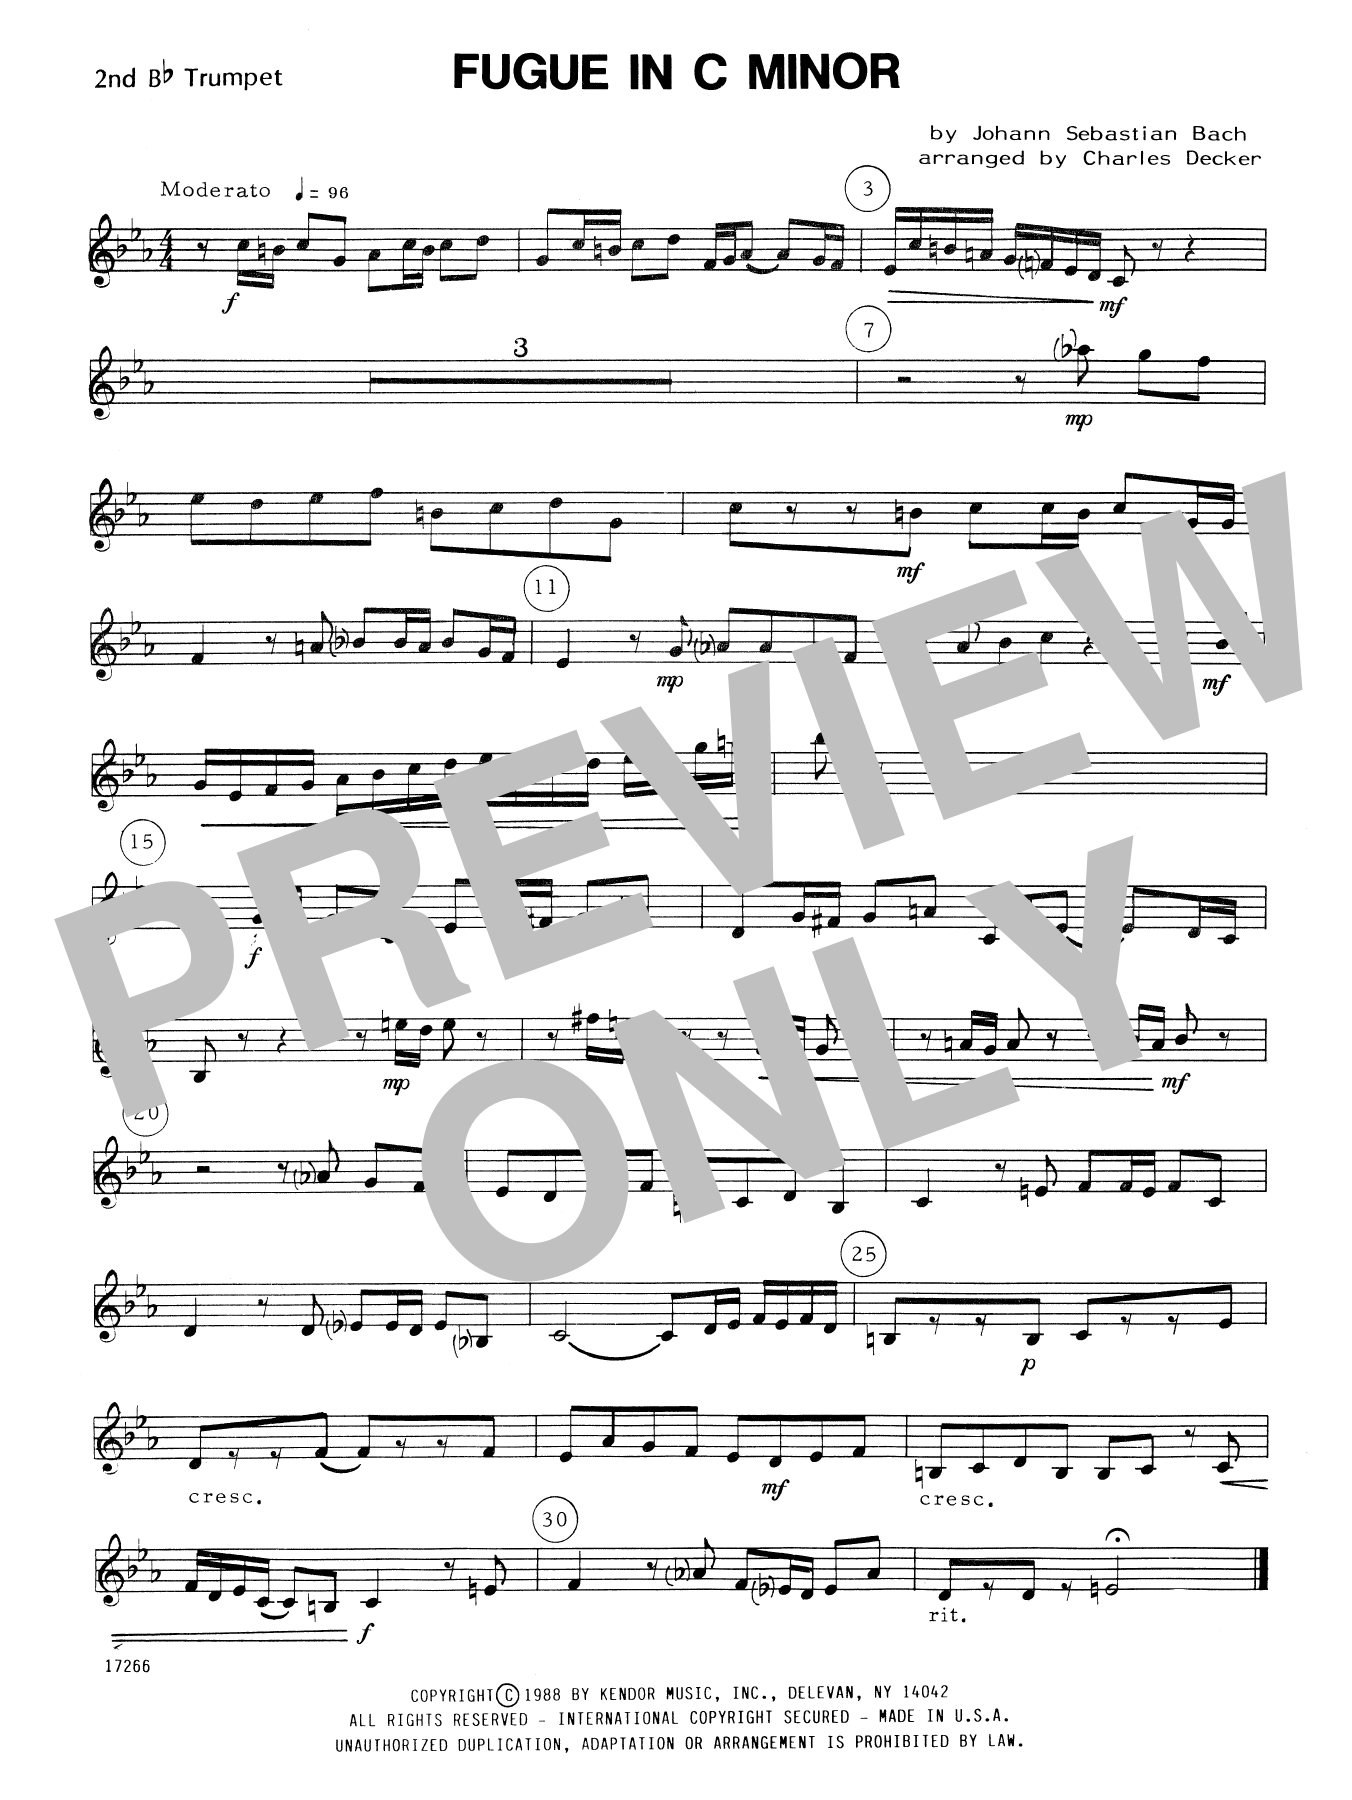 Download Charles Decker Fugue In C Minor - 2nd Bb Trumpet Sheet Music